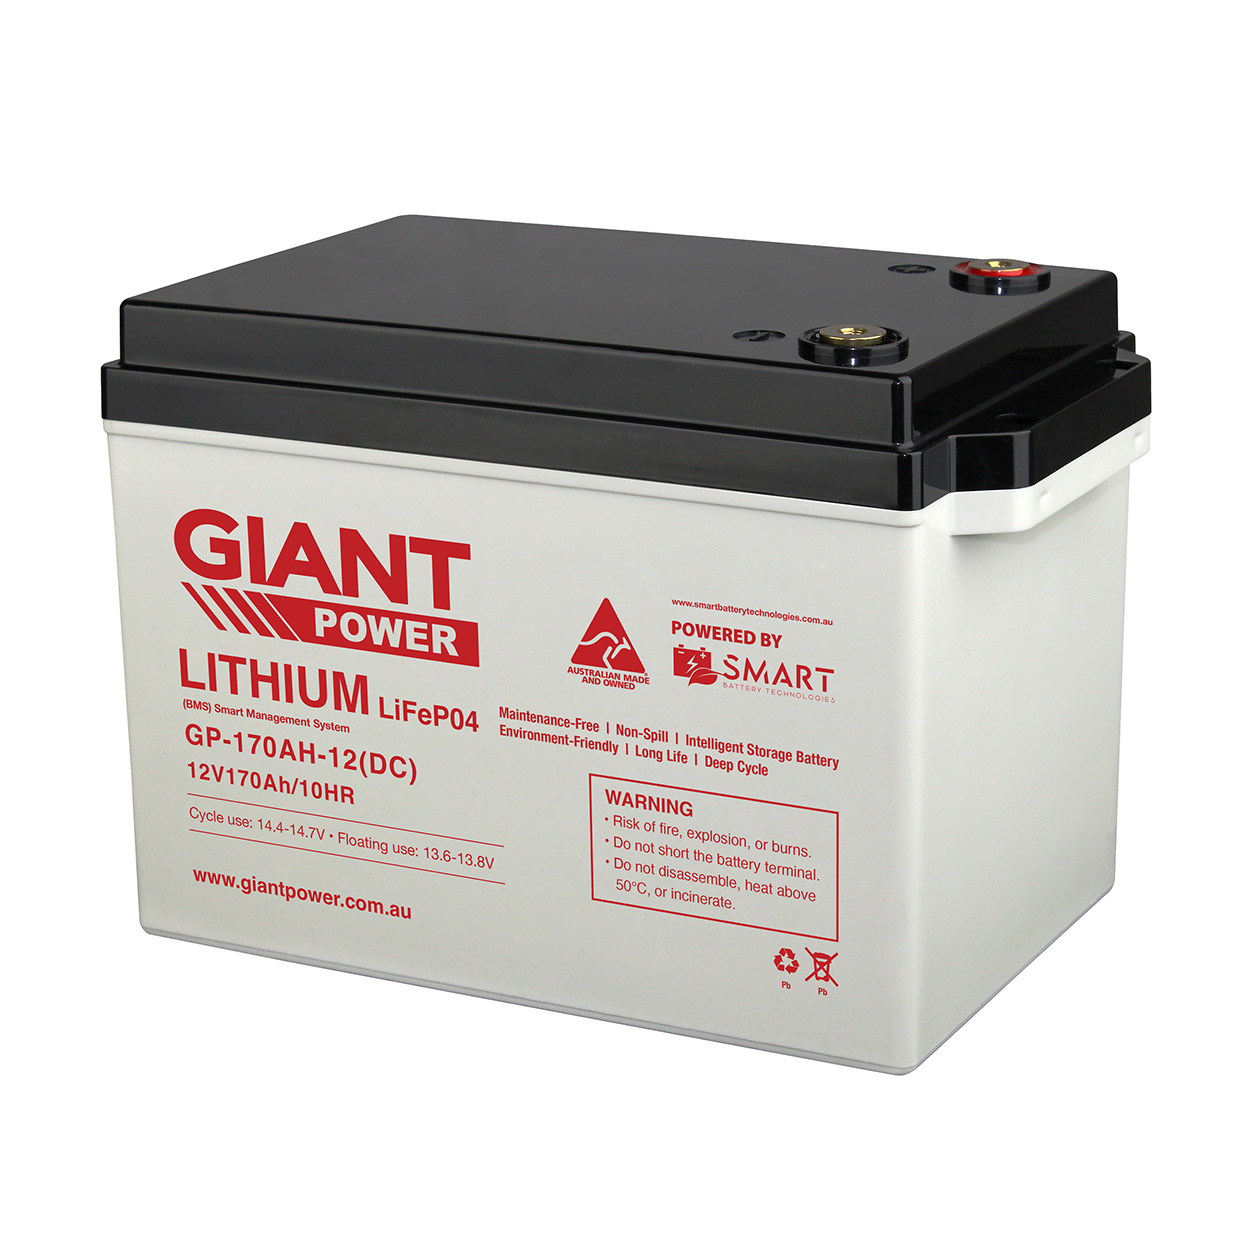 Giant Power 170Ah Lithium Batteries